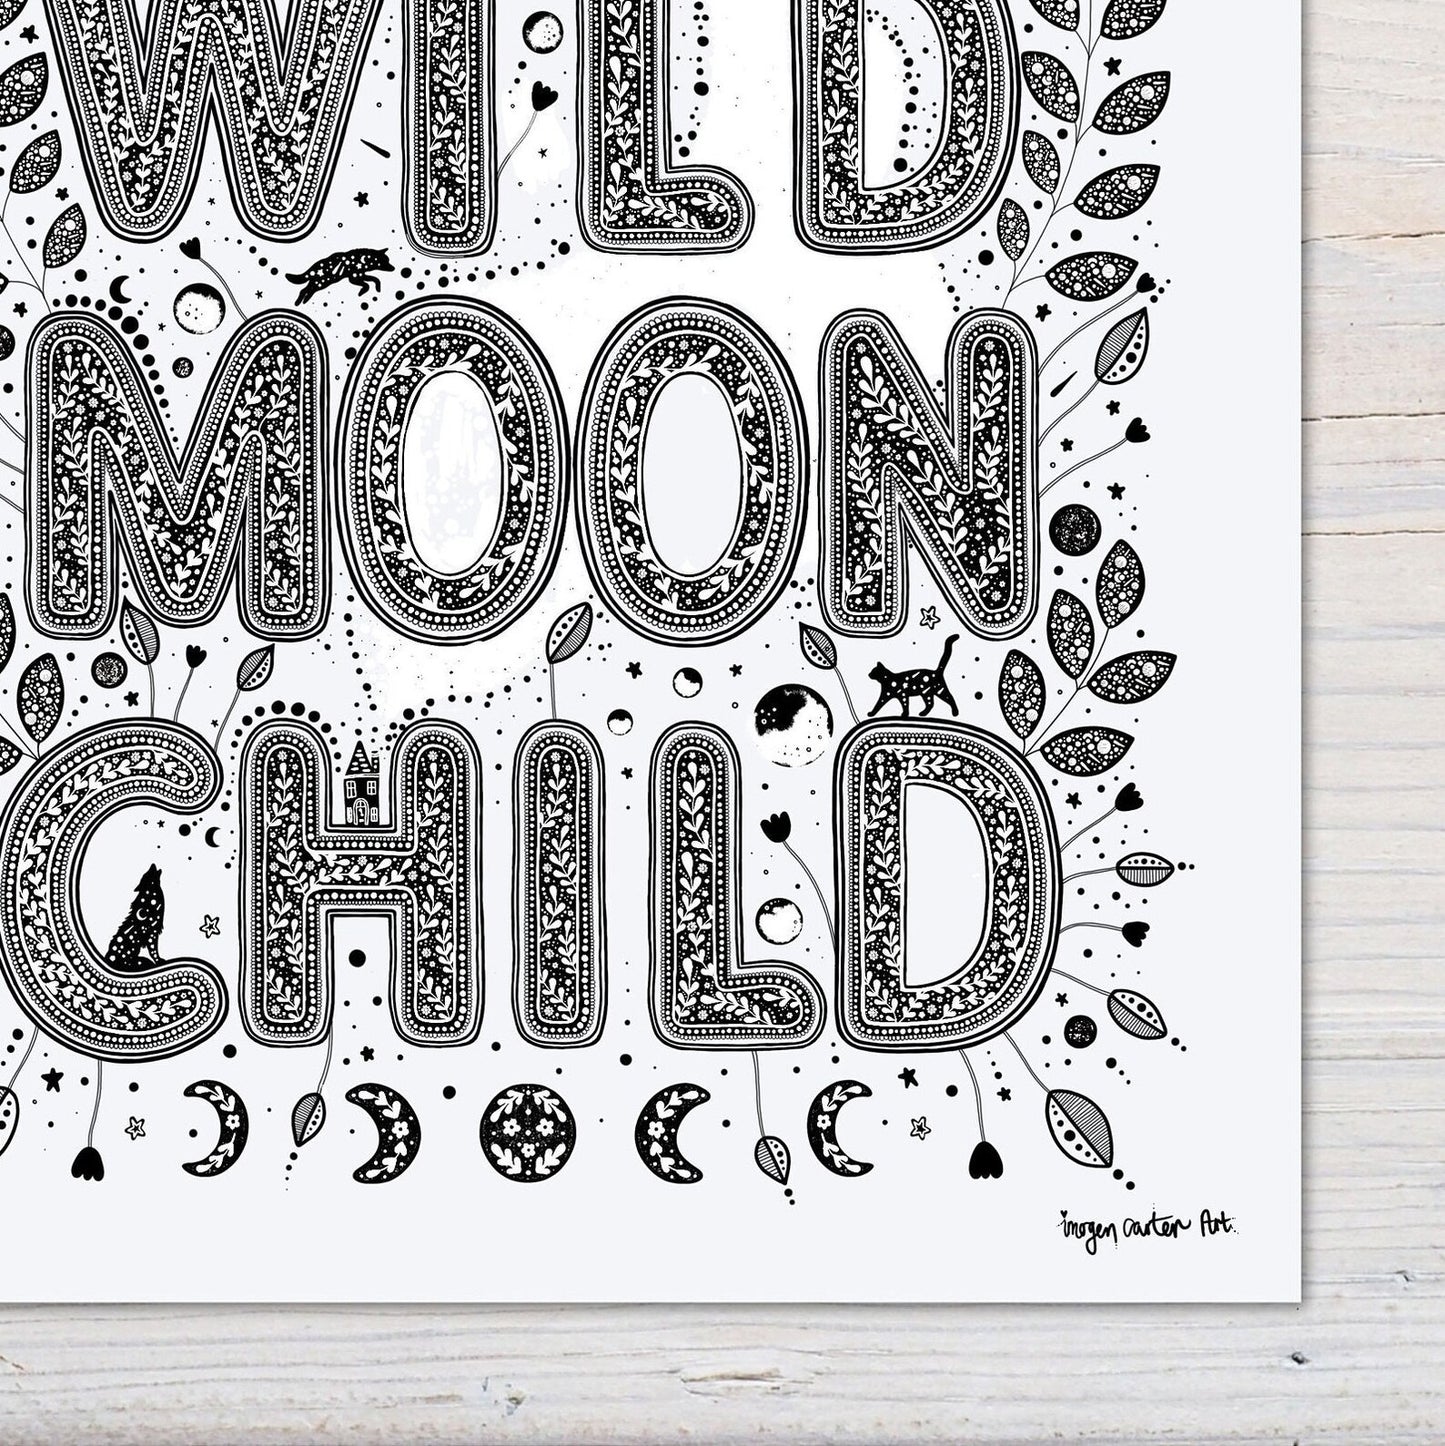 Stay Wild Moon Child / Art Print